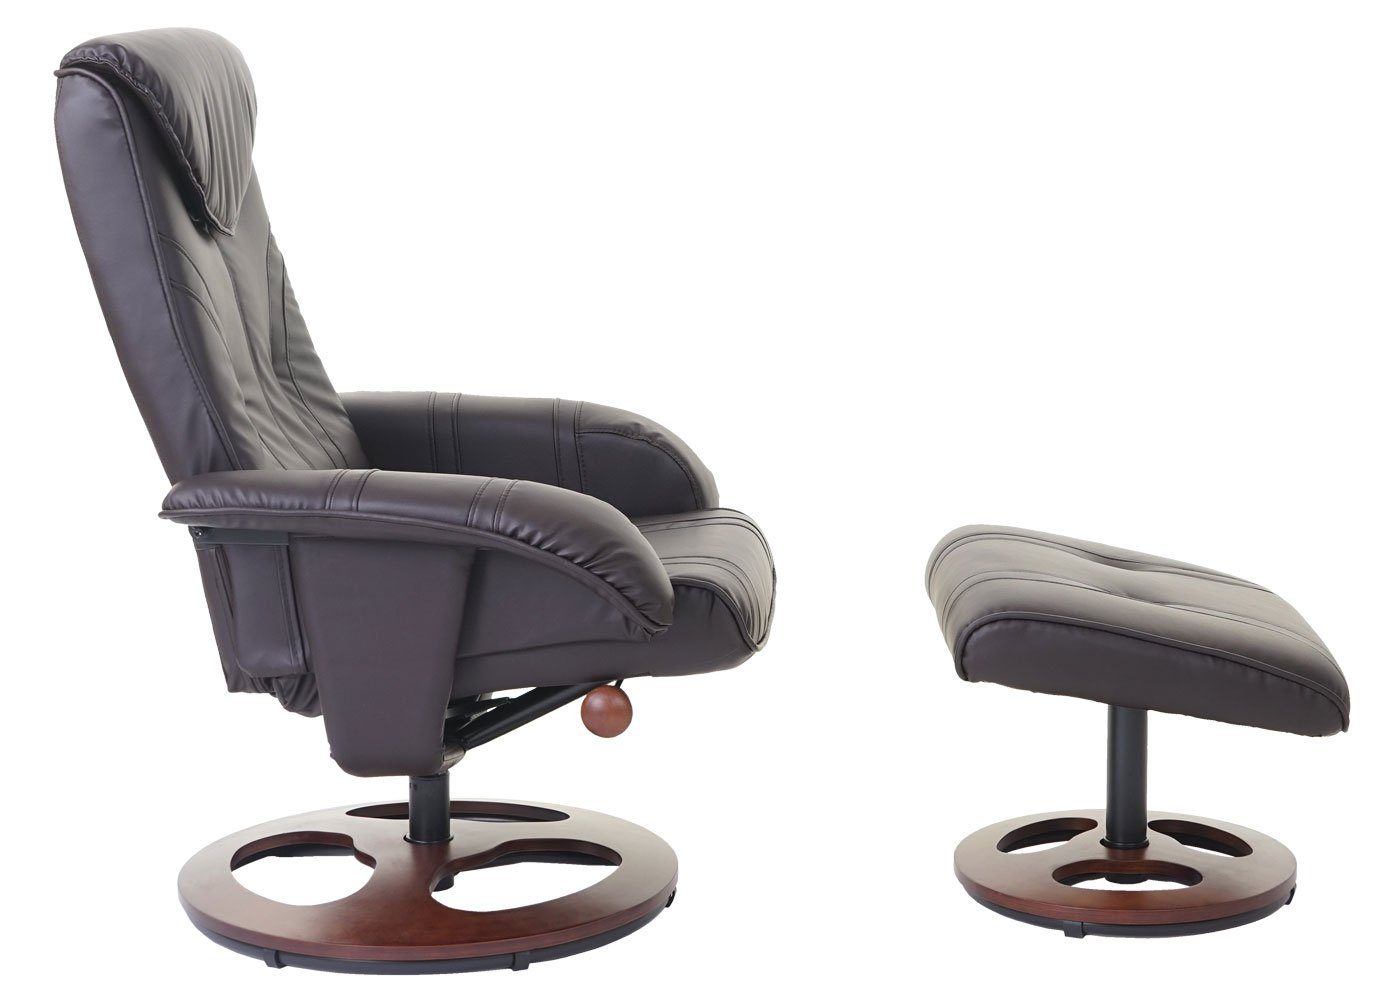 Sessel Um 360° feststellbar MCW-C46, durch Schraubmechanismus Relaxsessel braun MCW drehbar, neigbar,